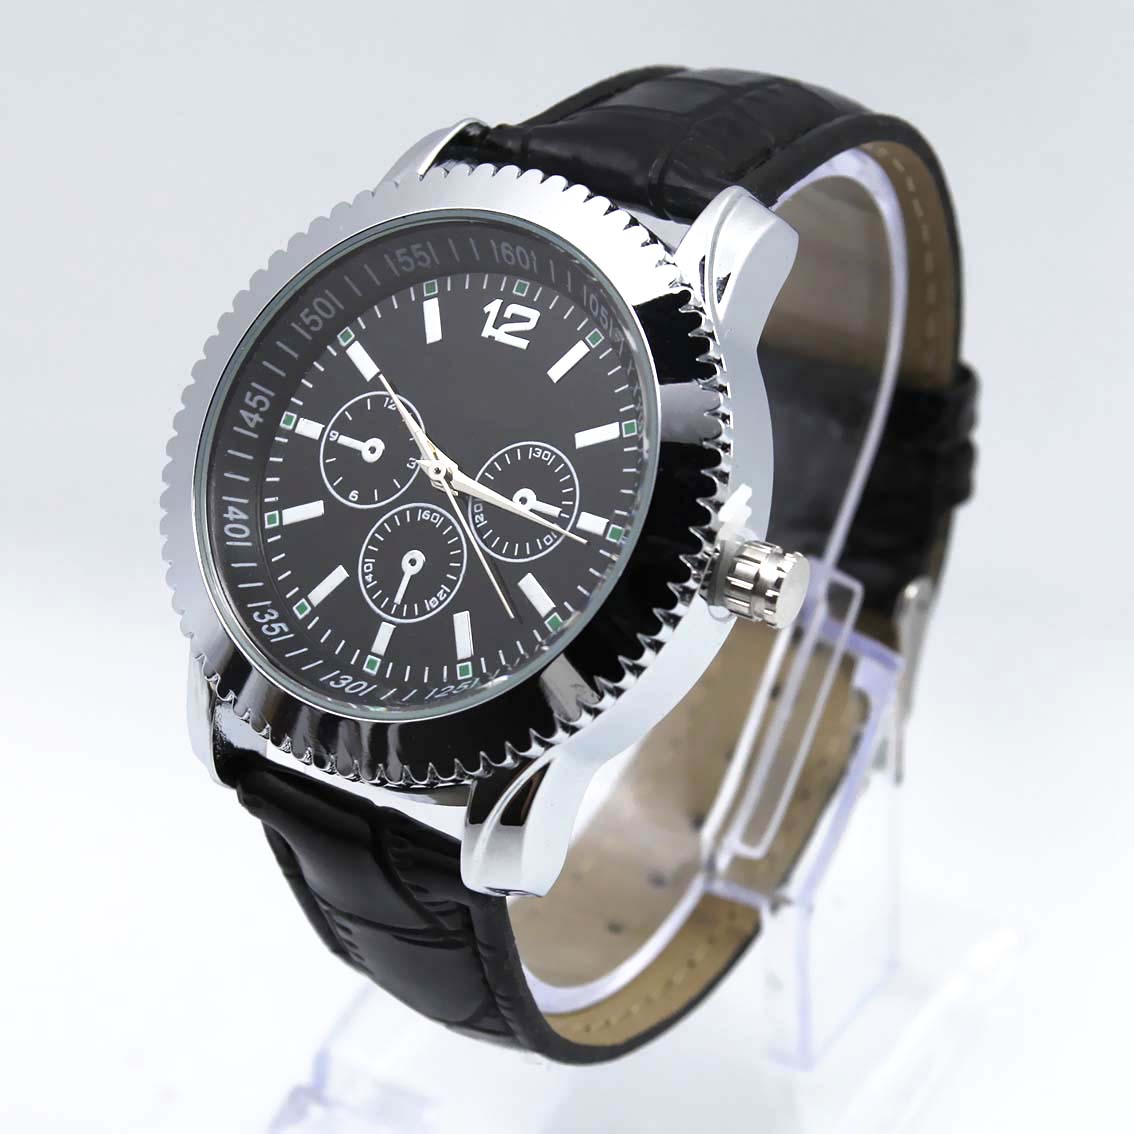 #02110Men's wristwatch quartz analog leather strap watch